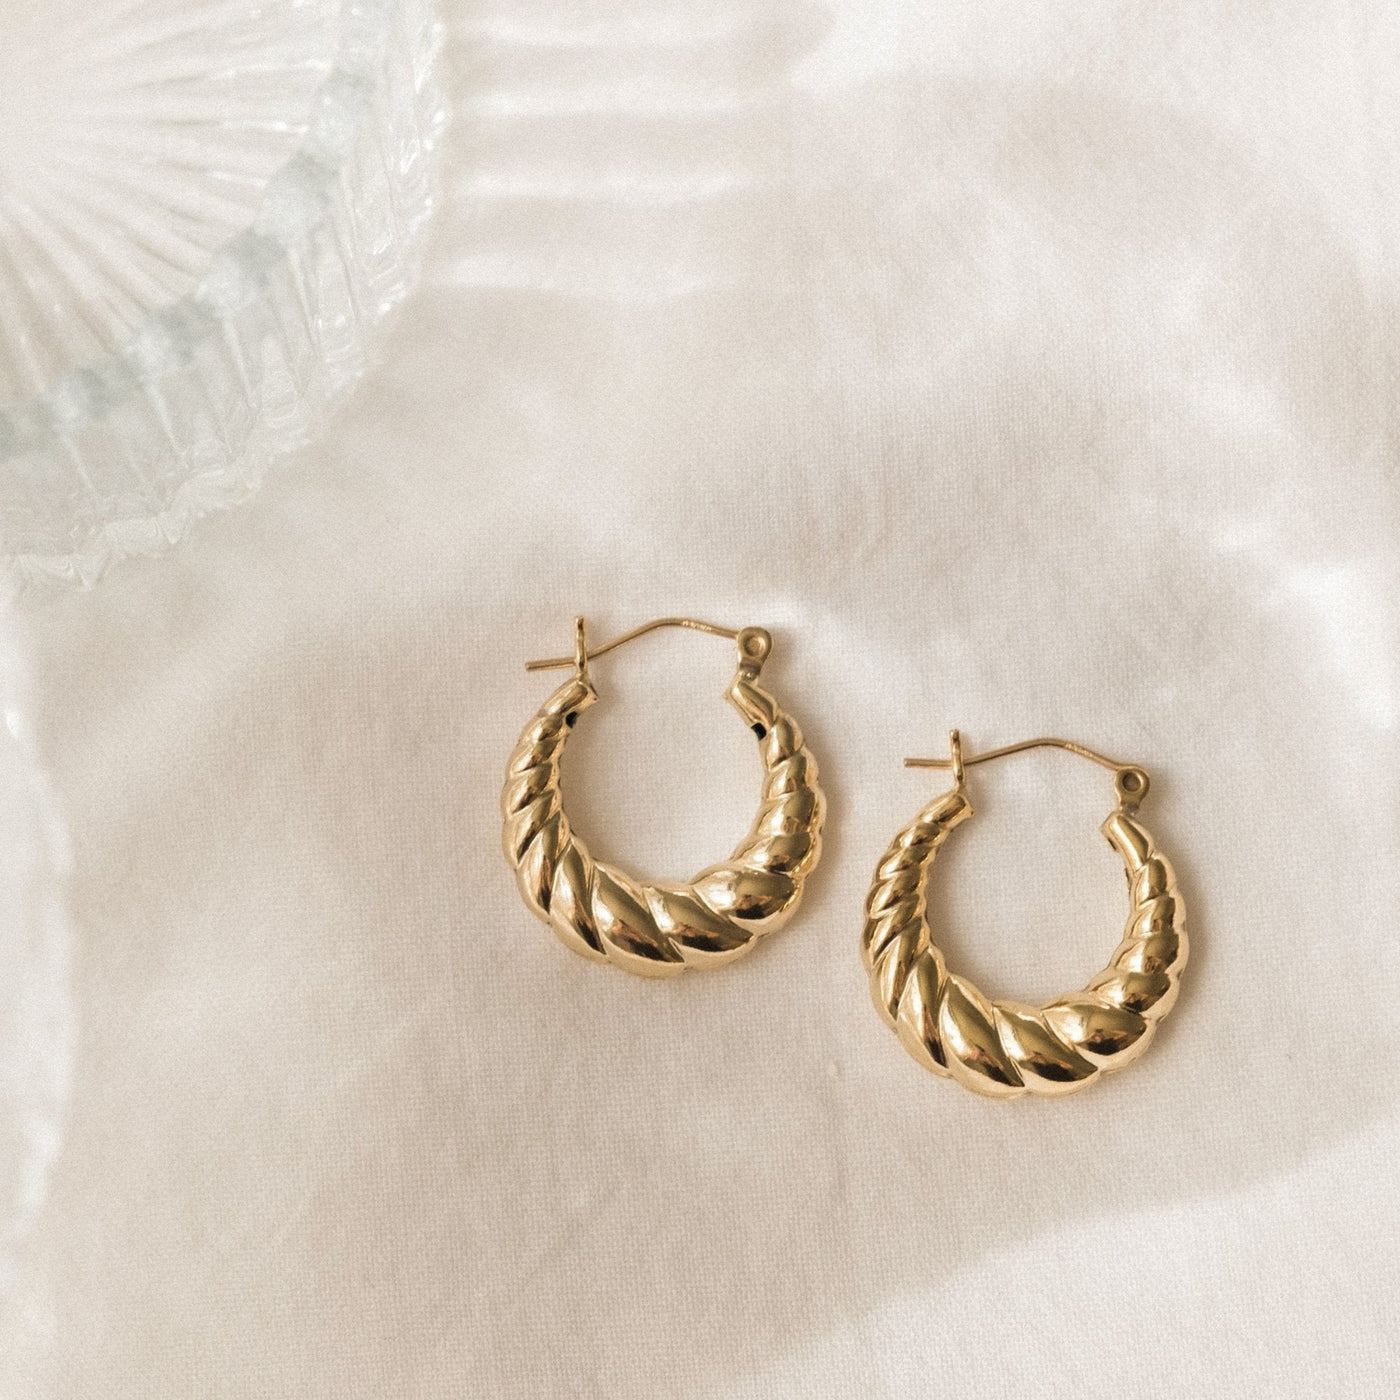 Croissant Hoop Earrings by Simple & Dainty Jewelry